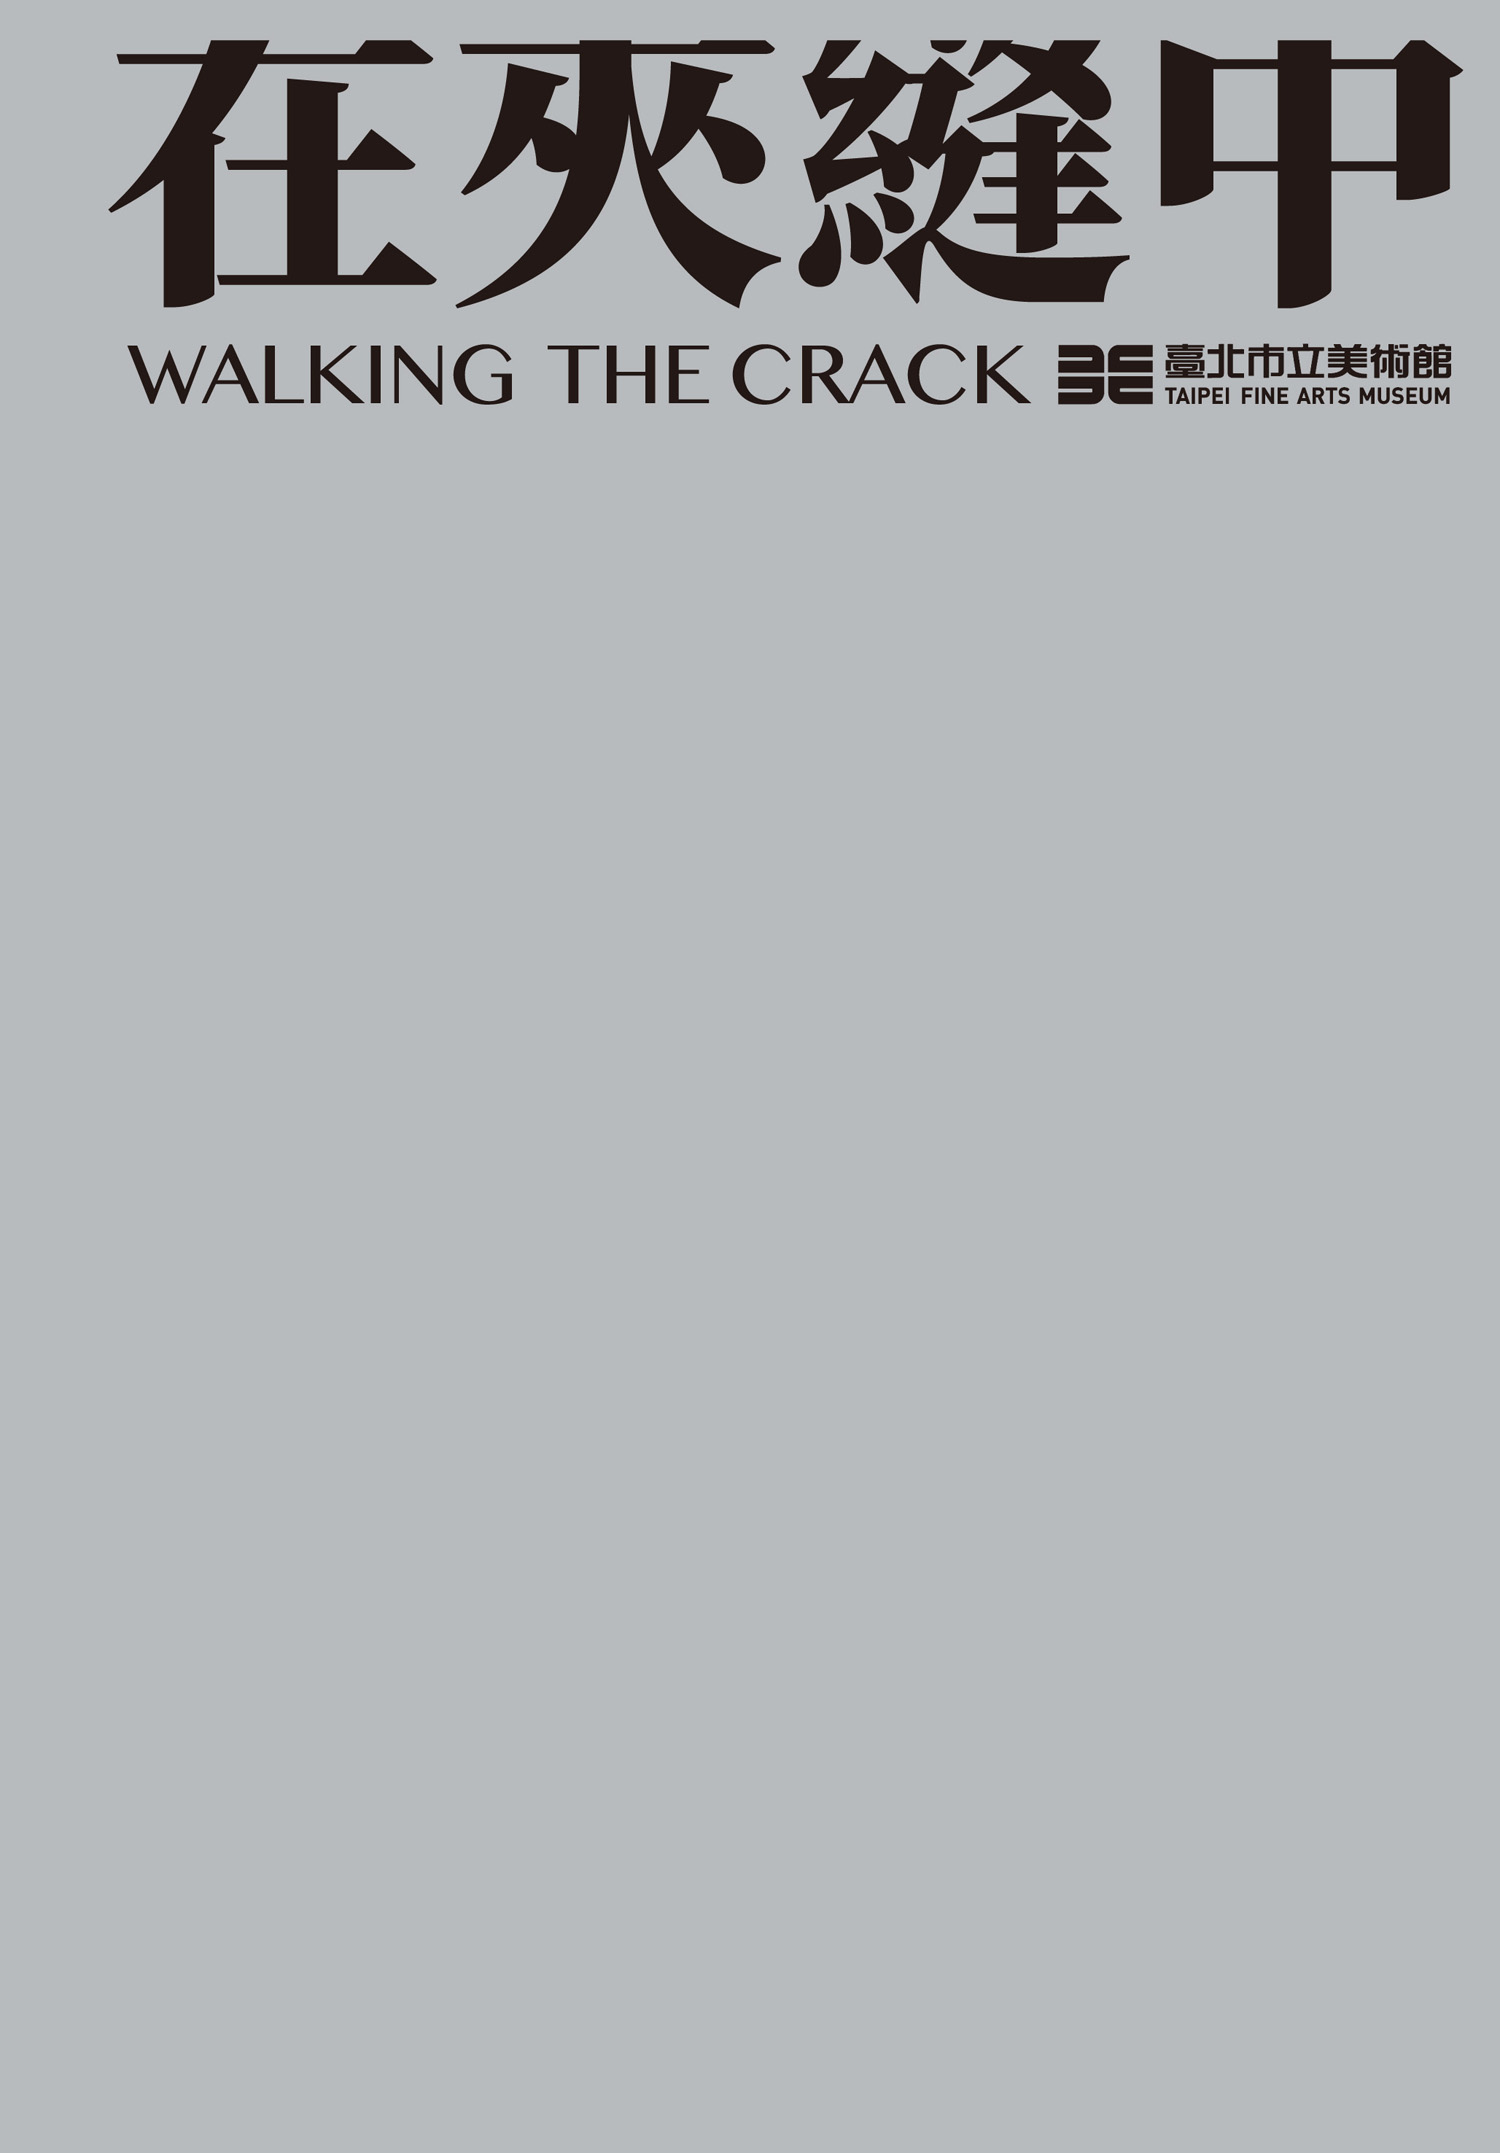 Walking the crack  的圖說